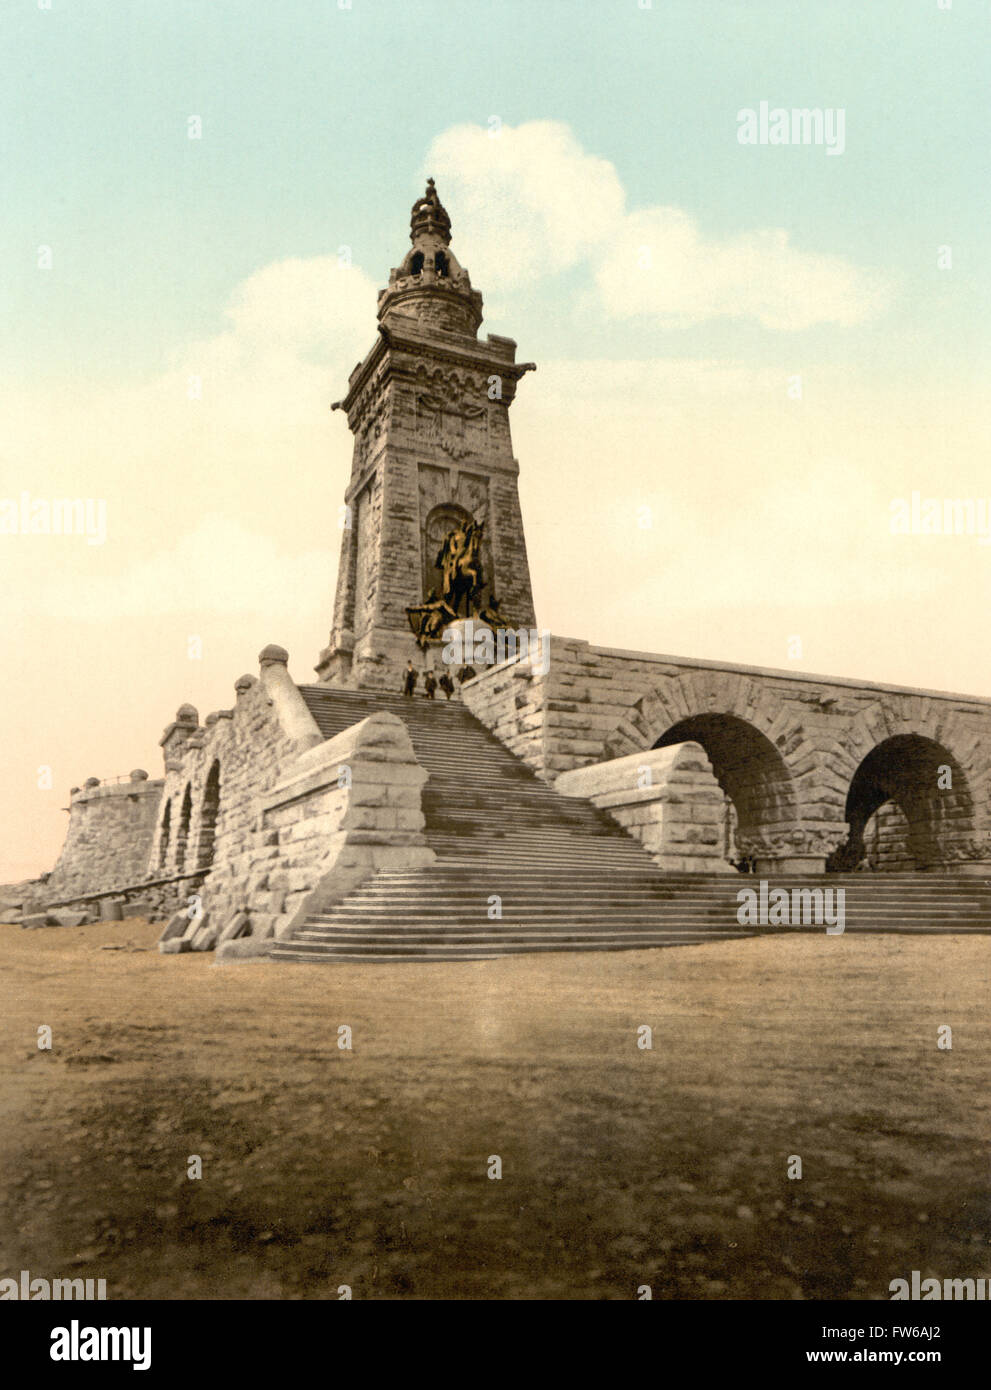 Monument of Kaiser Wilhelm, Thuringia, Germany, Photochrome Print, circa 1900 Stock Photo